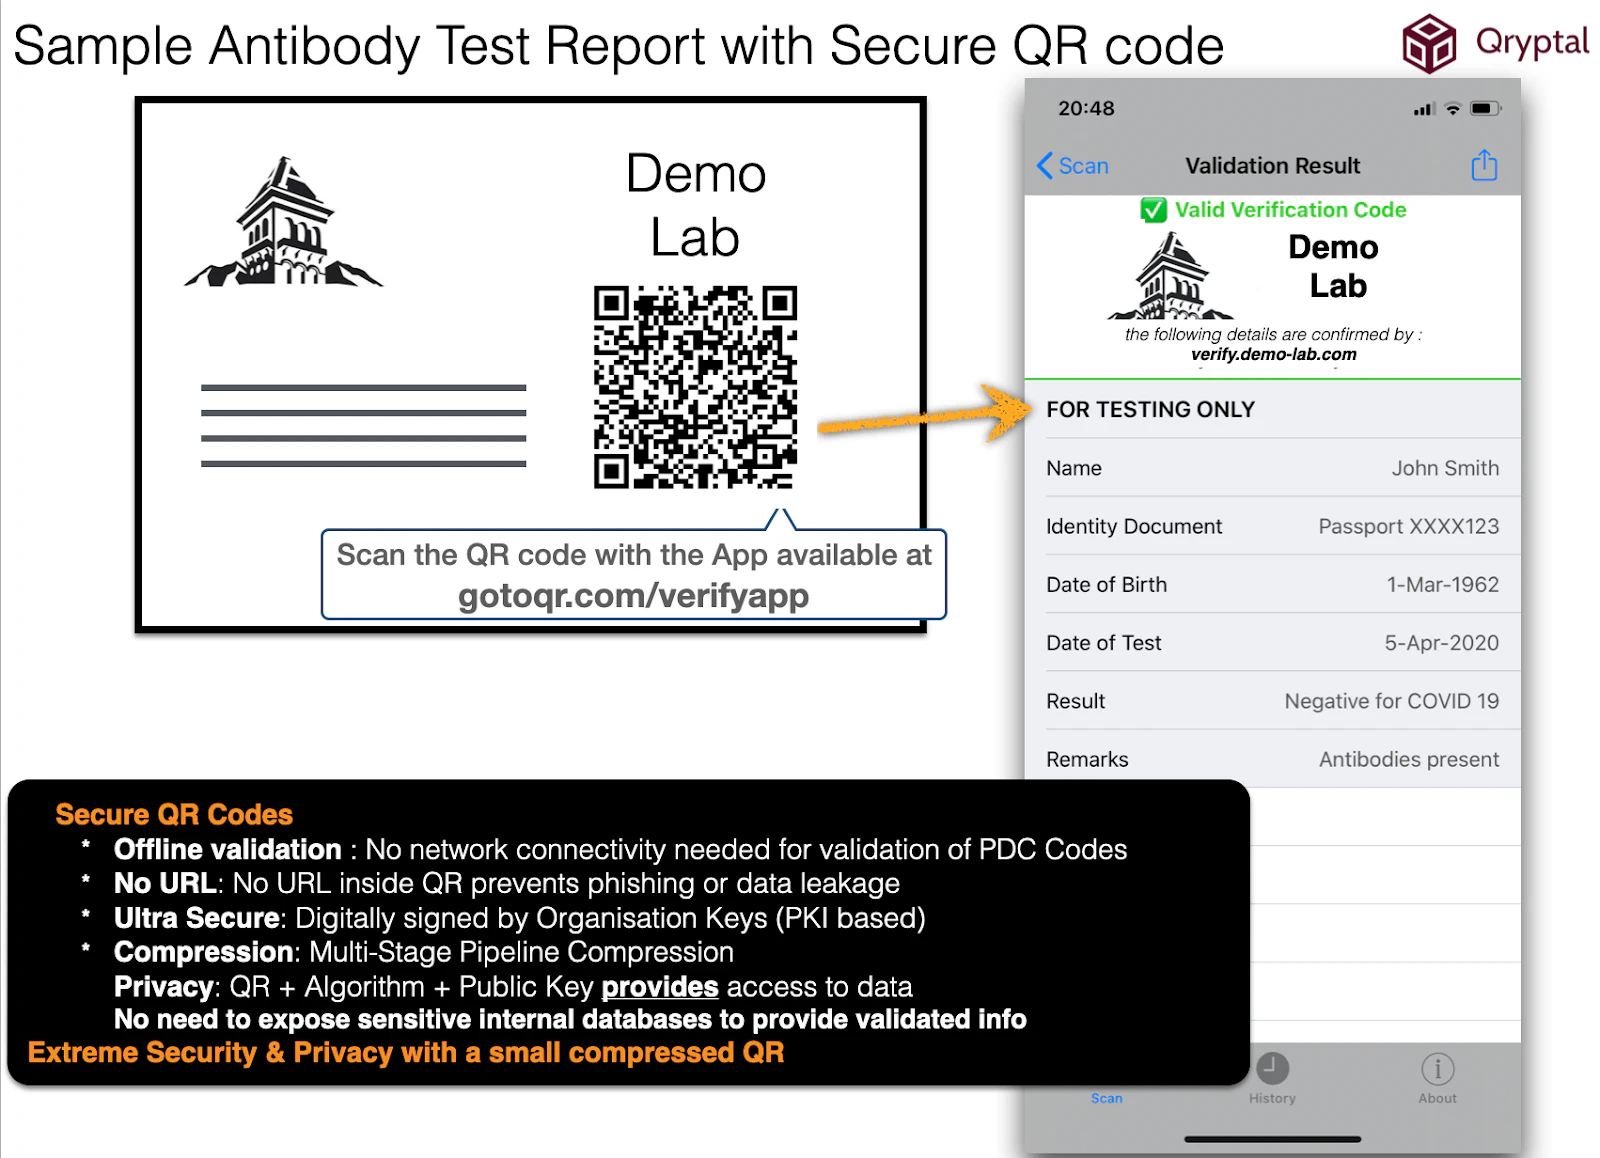 Sample Antibody test report